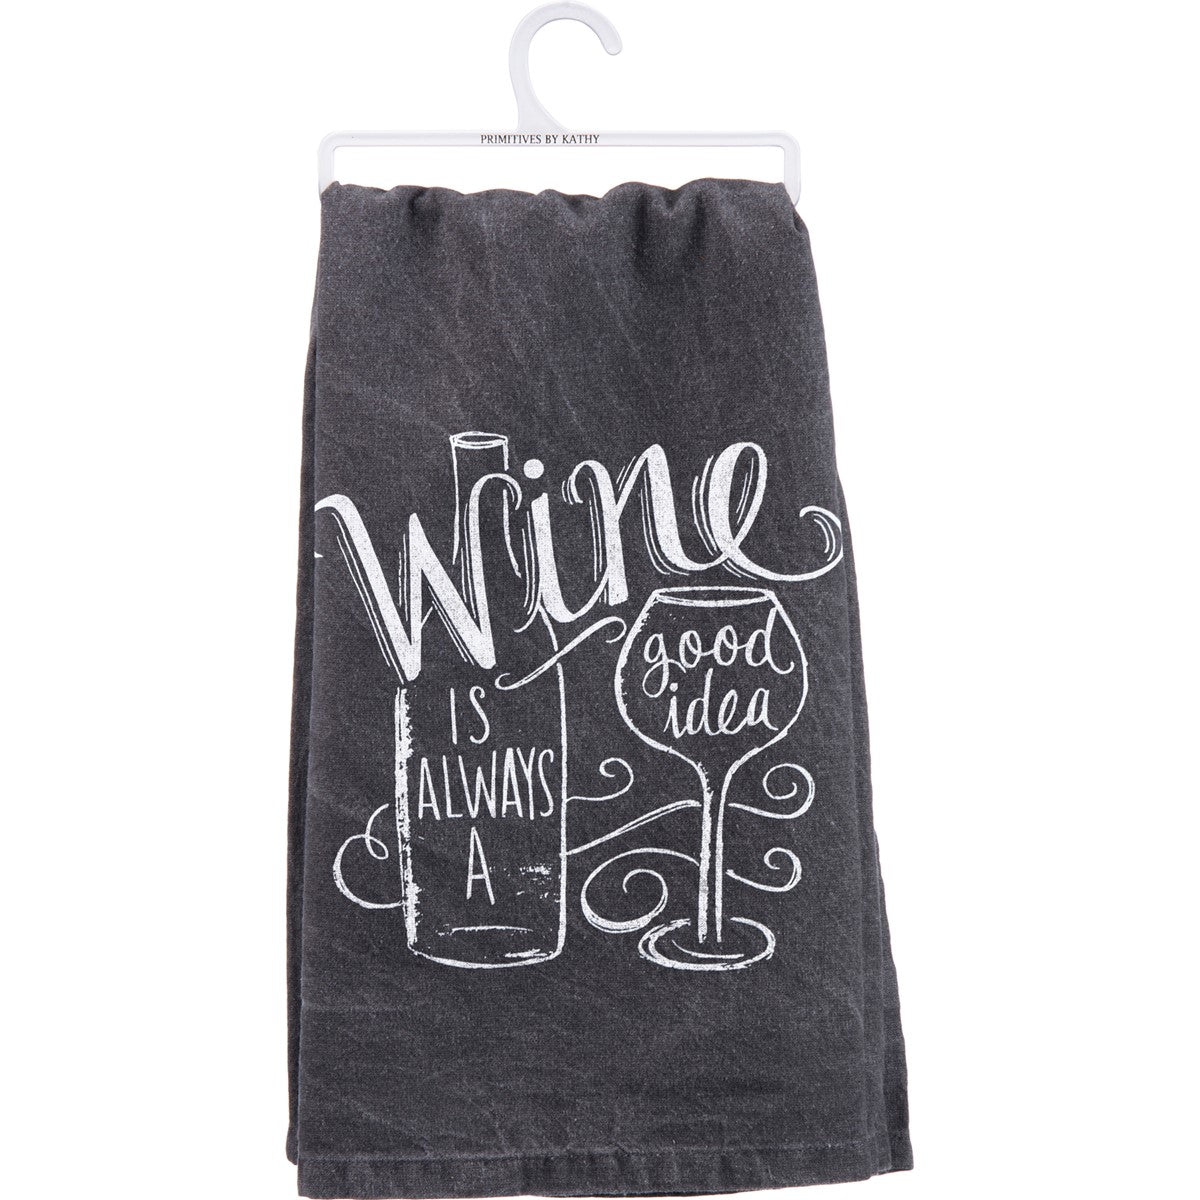 "WINE IS ALWAYS A GOOD IDEA" DISH TOWEL